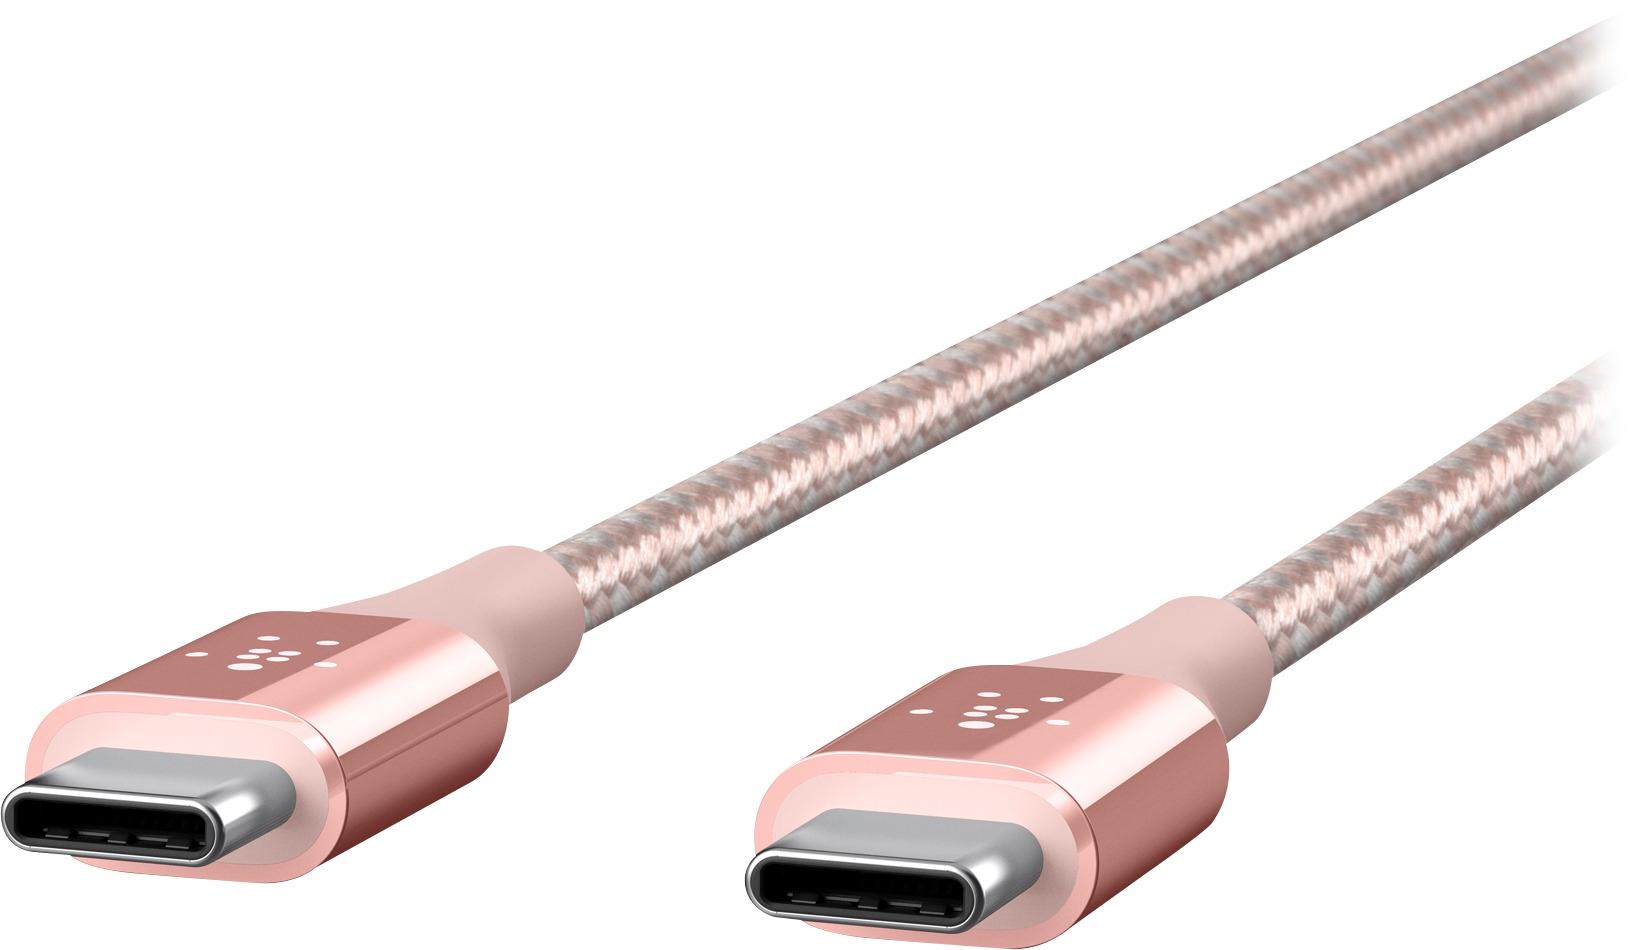 Belkin Mixit DuraTek USB-C Cable (USB Type-C) 4Ft Rose Gold